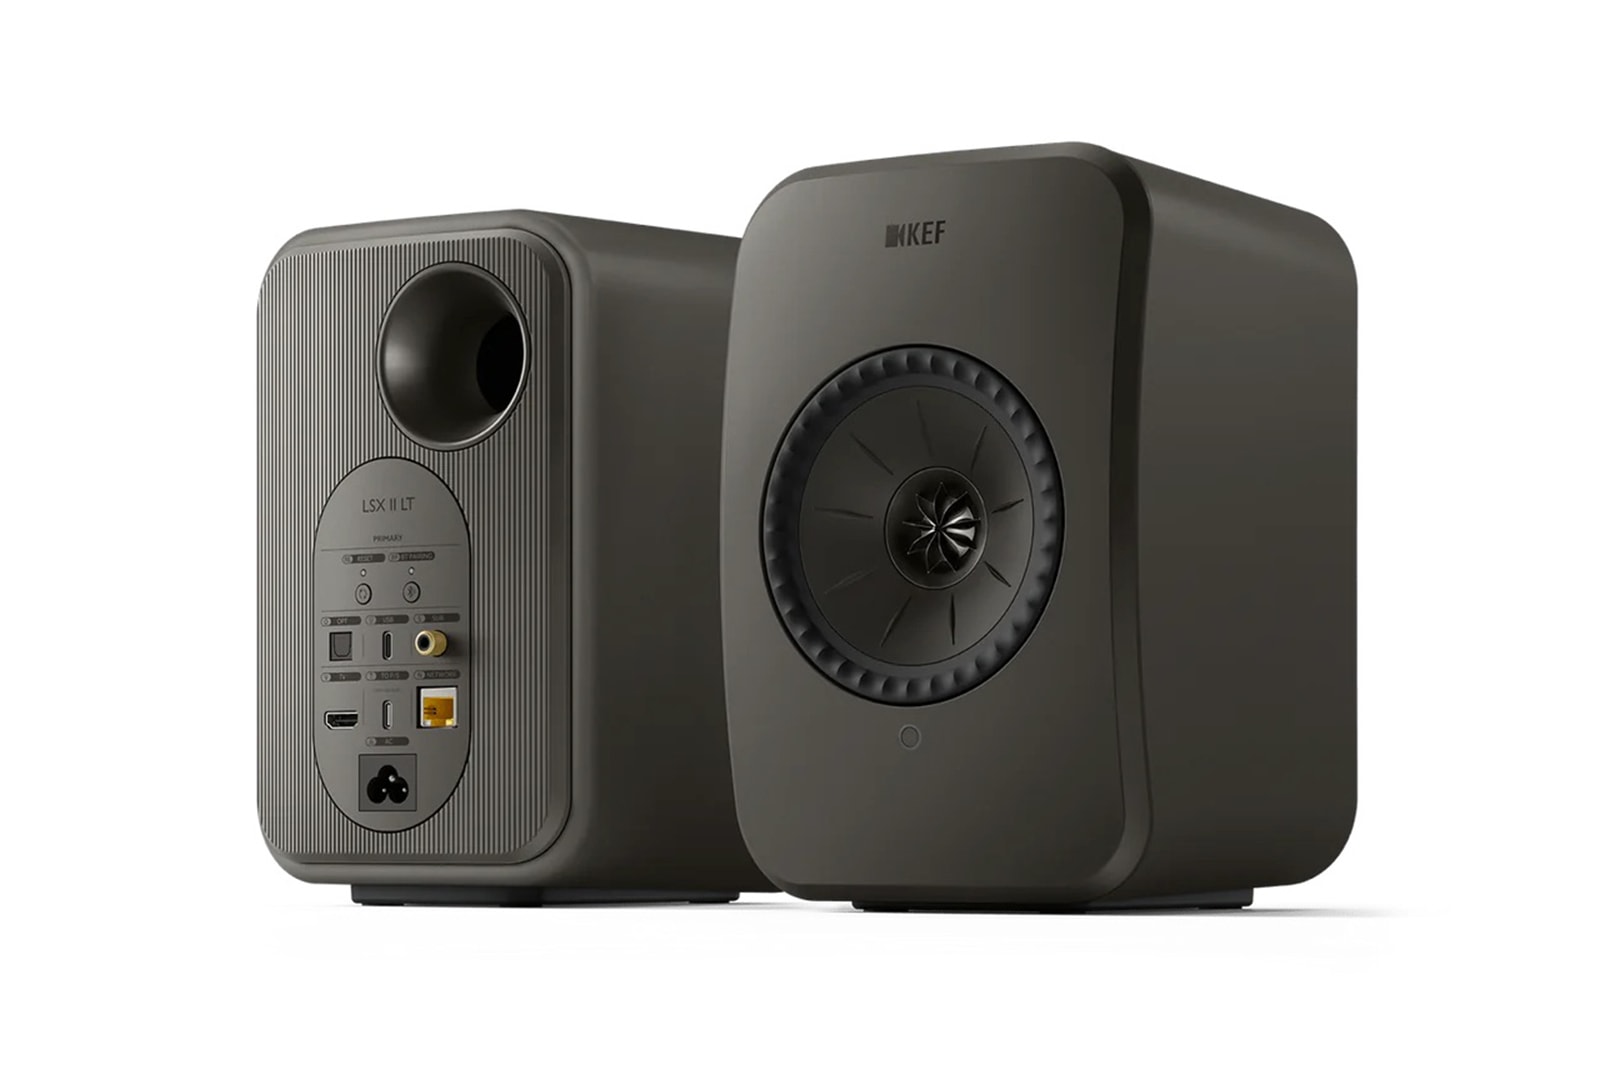 KEF Launches New LSX II LT Wireless Speakers Hifi Audiophile 